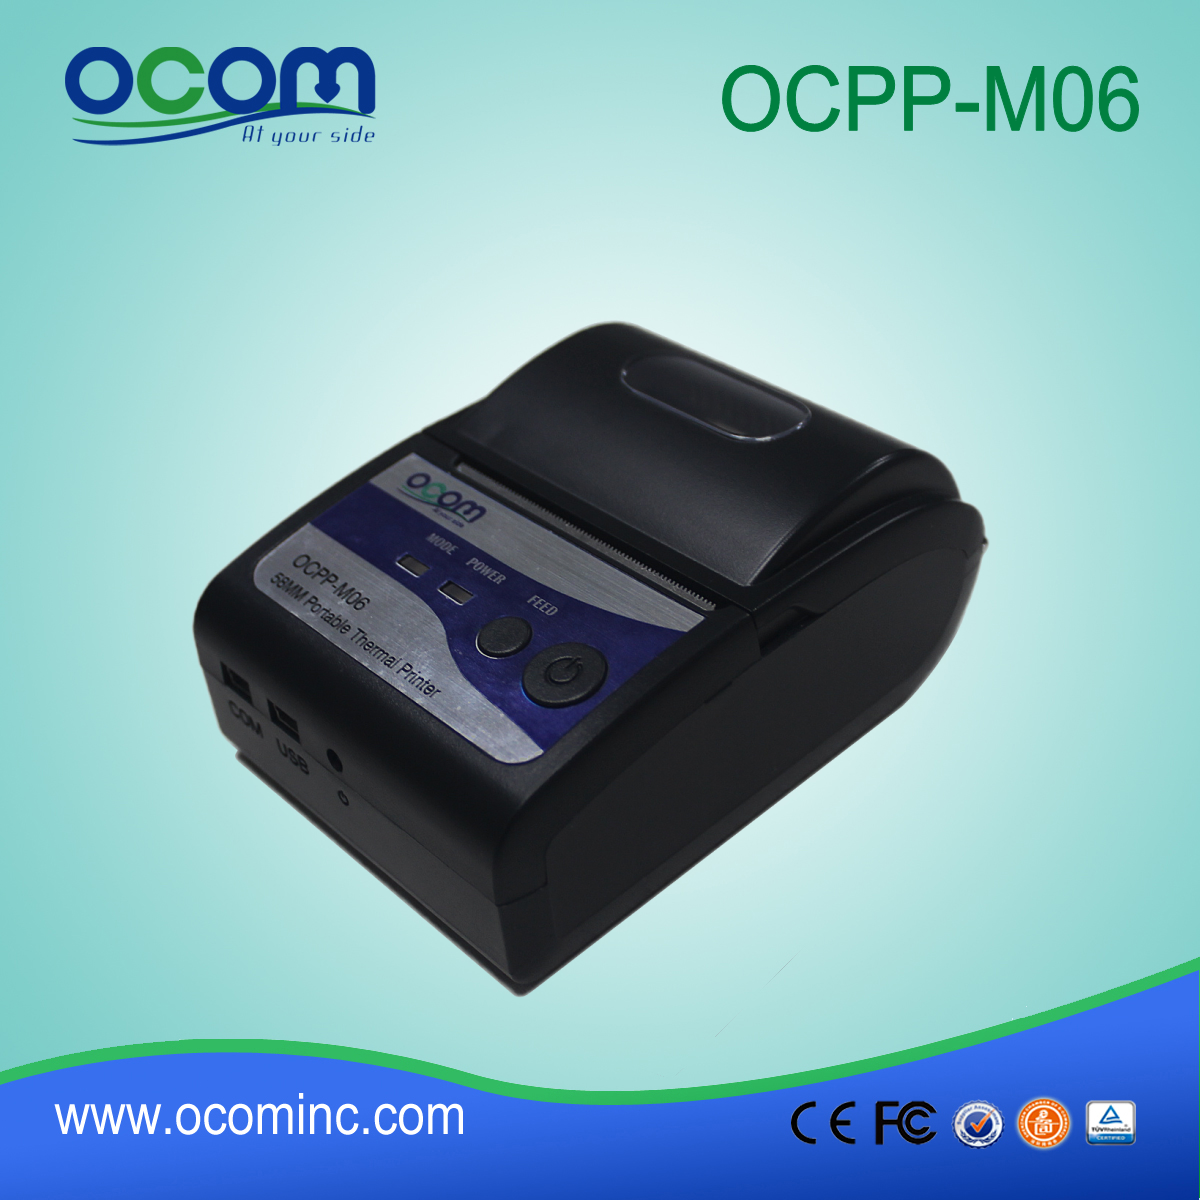 OCPP-M06: China fábrica barato impressora térmica de 2 polegadas, impressora térmica de 2 polegadas